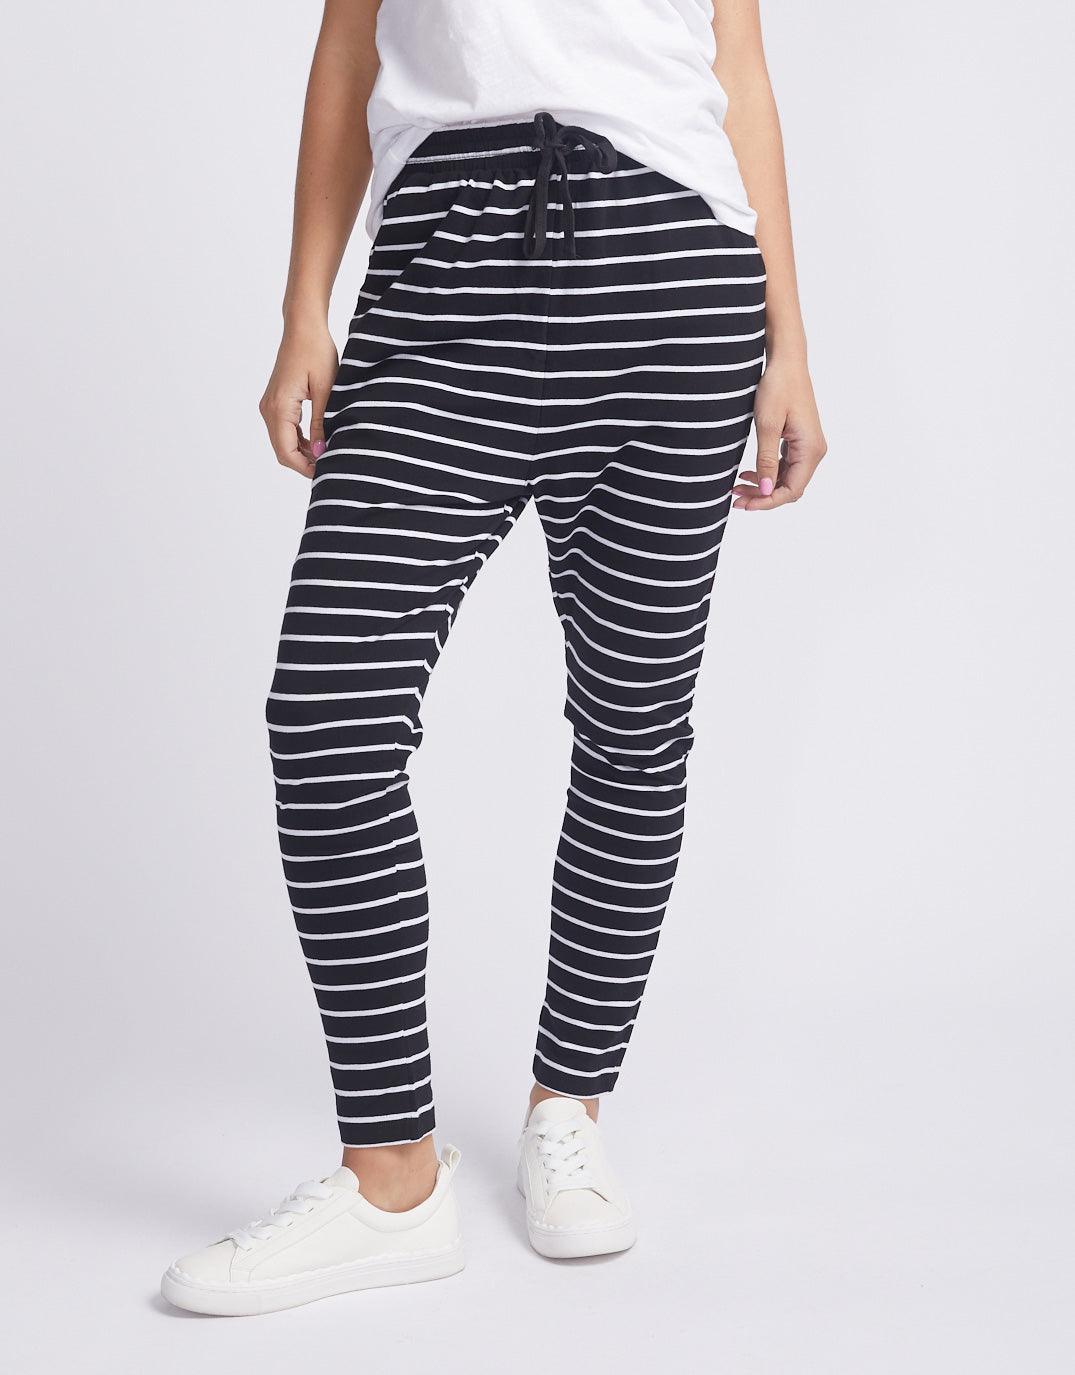 Buy Jade Lounge Pants - Black/White Stripe Betty Basics for Sale Online ...